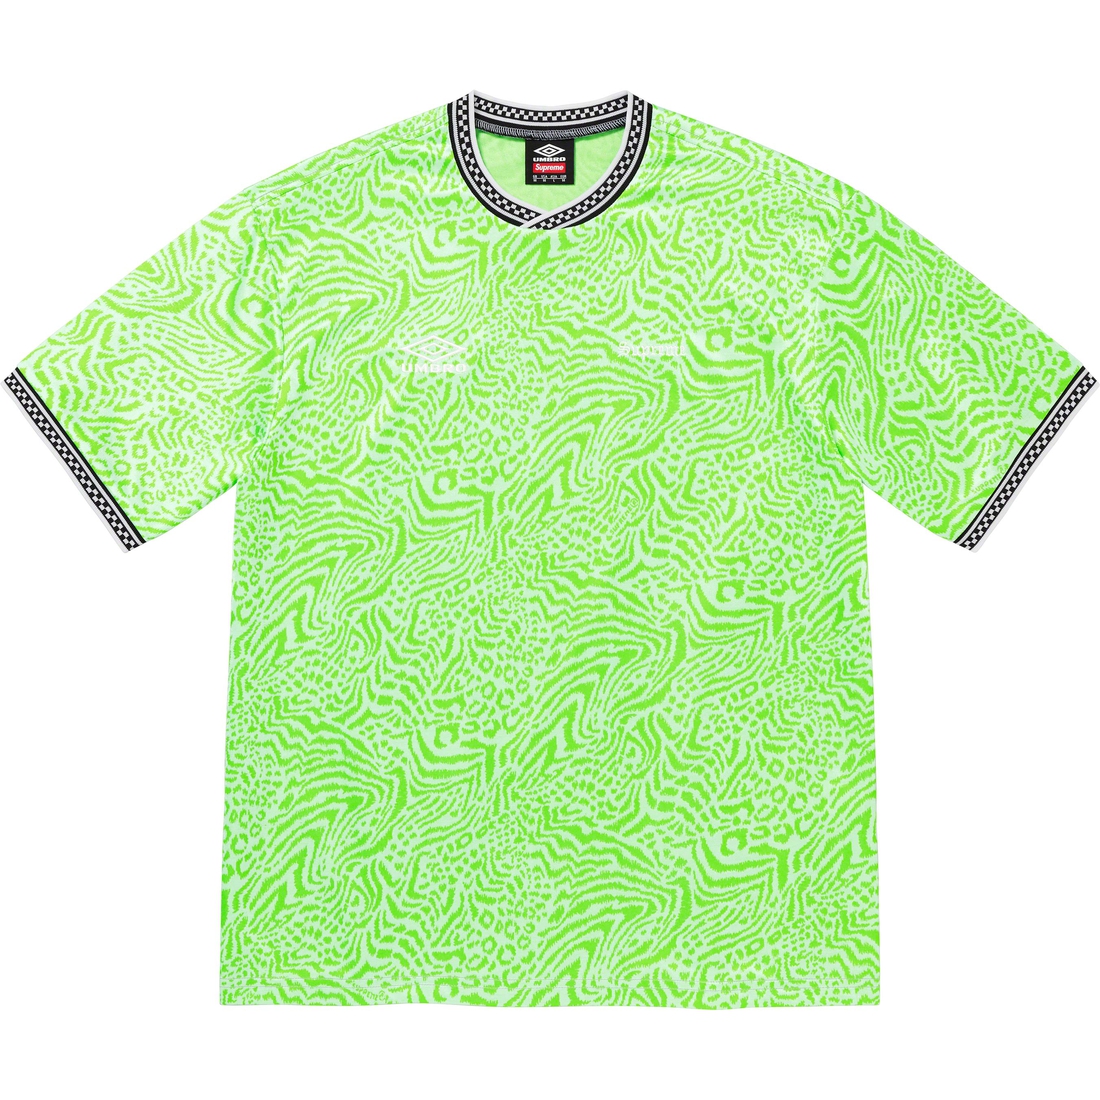 Tシャツ/カットソー(半袖/袖なし)Supreme / Umbro Jacquard Animal Print So